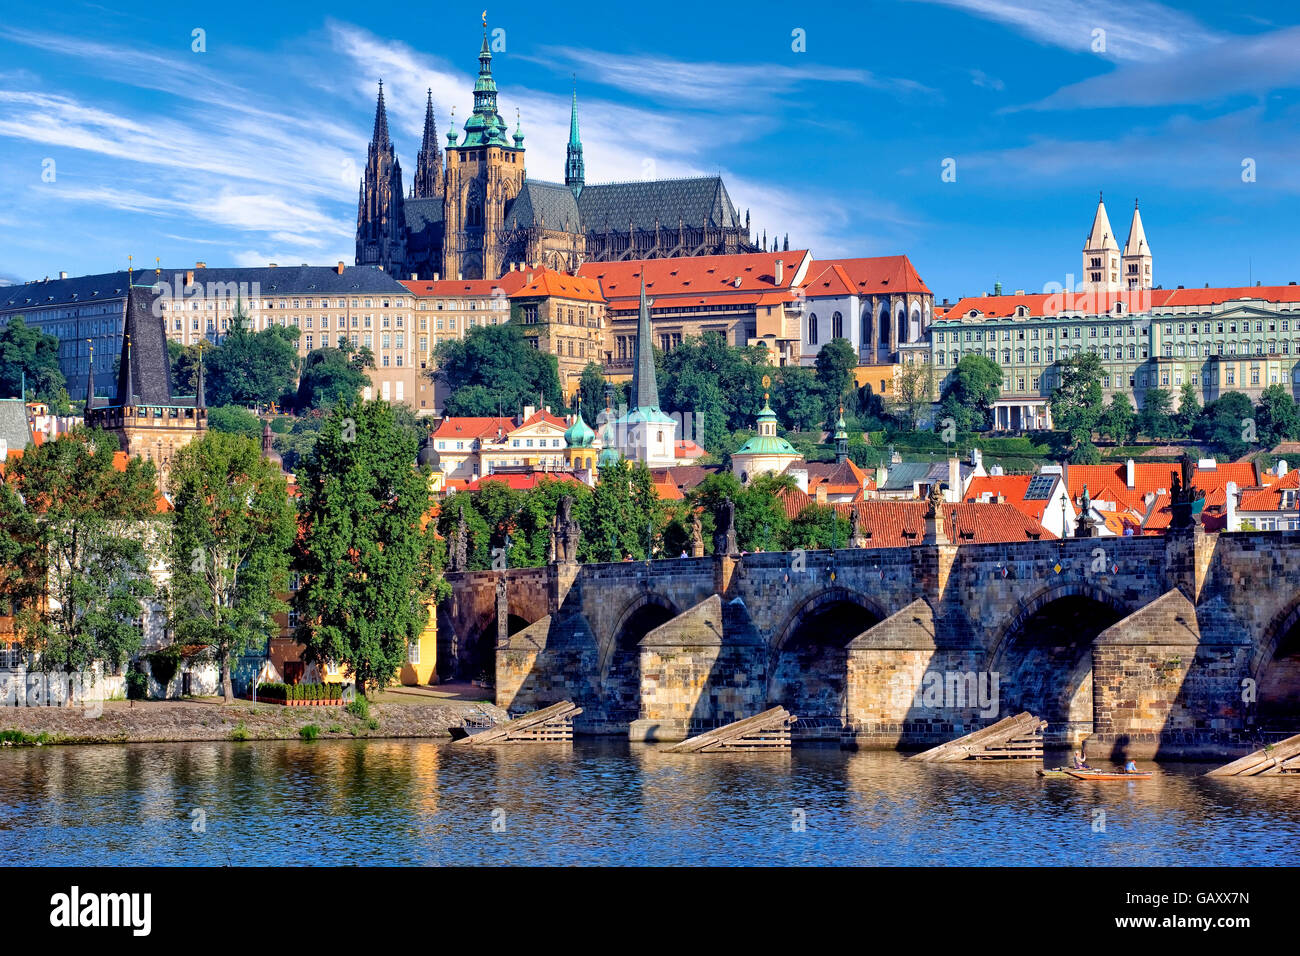 Charles bridge, castle and Vltava river in Prague Stock Photo